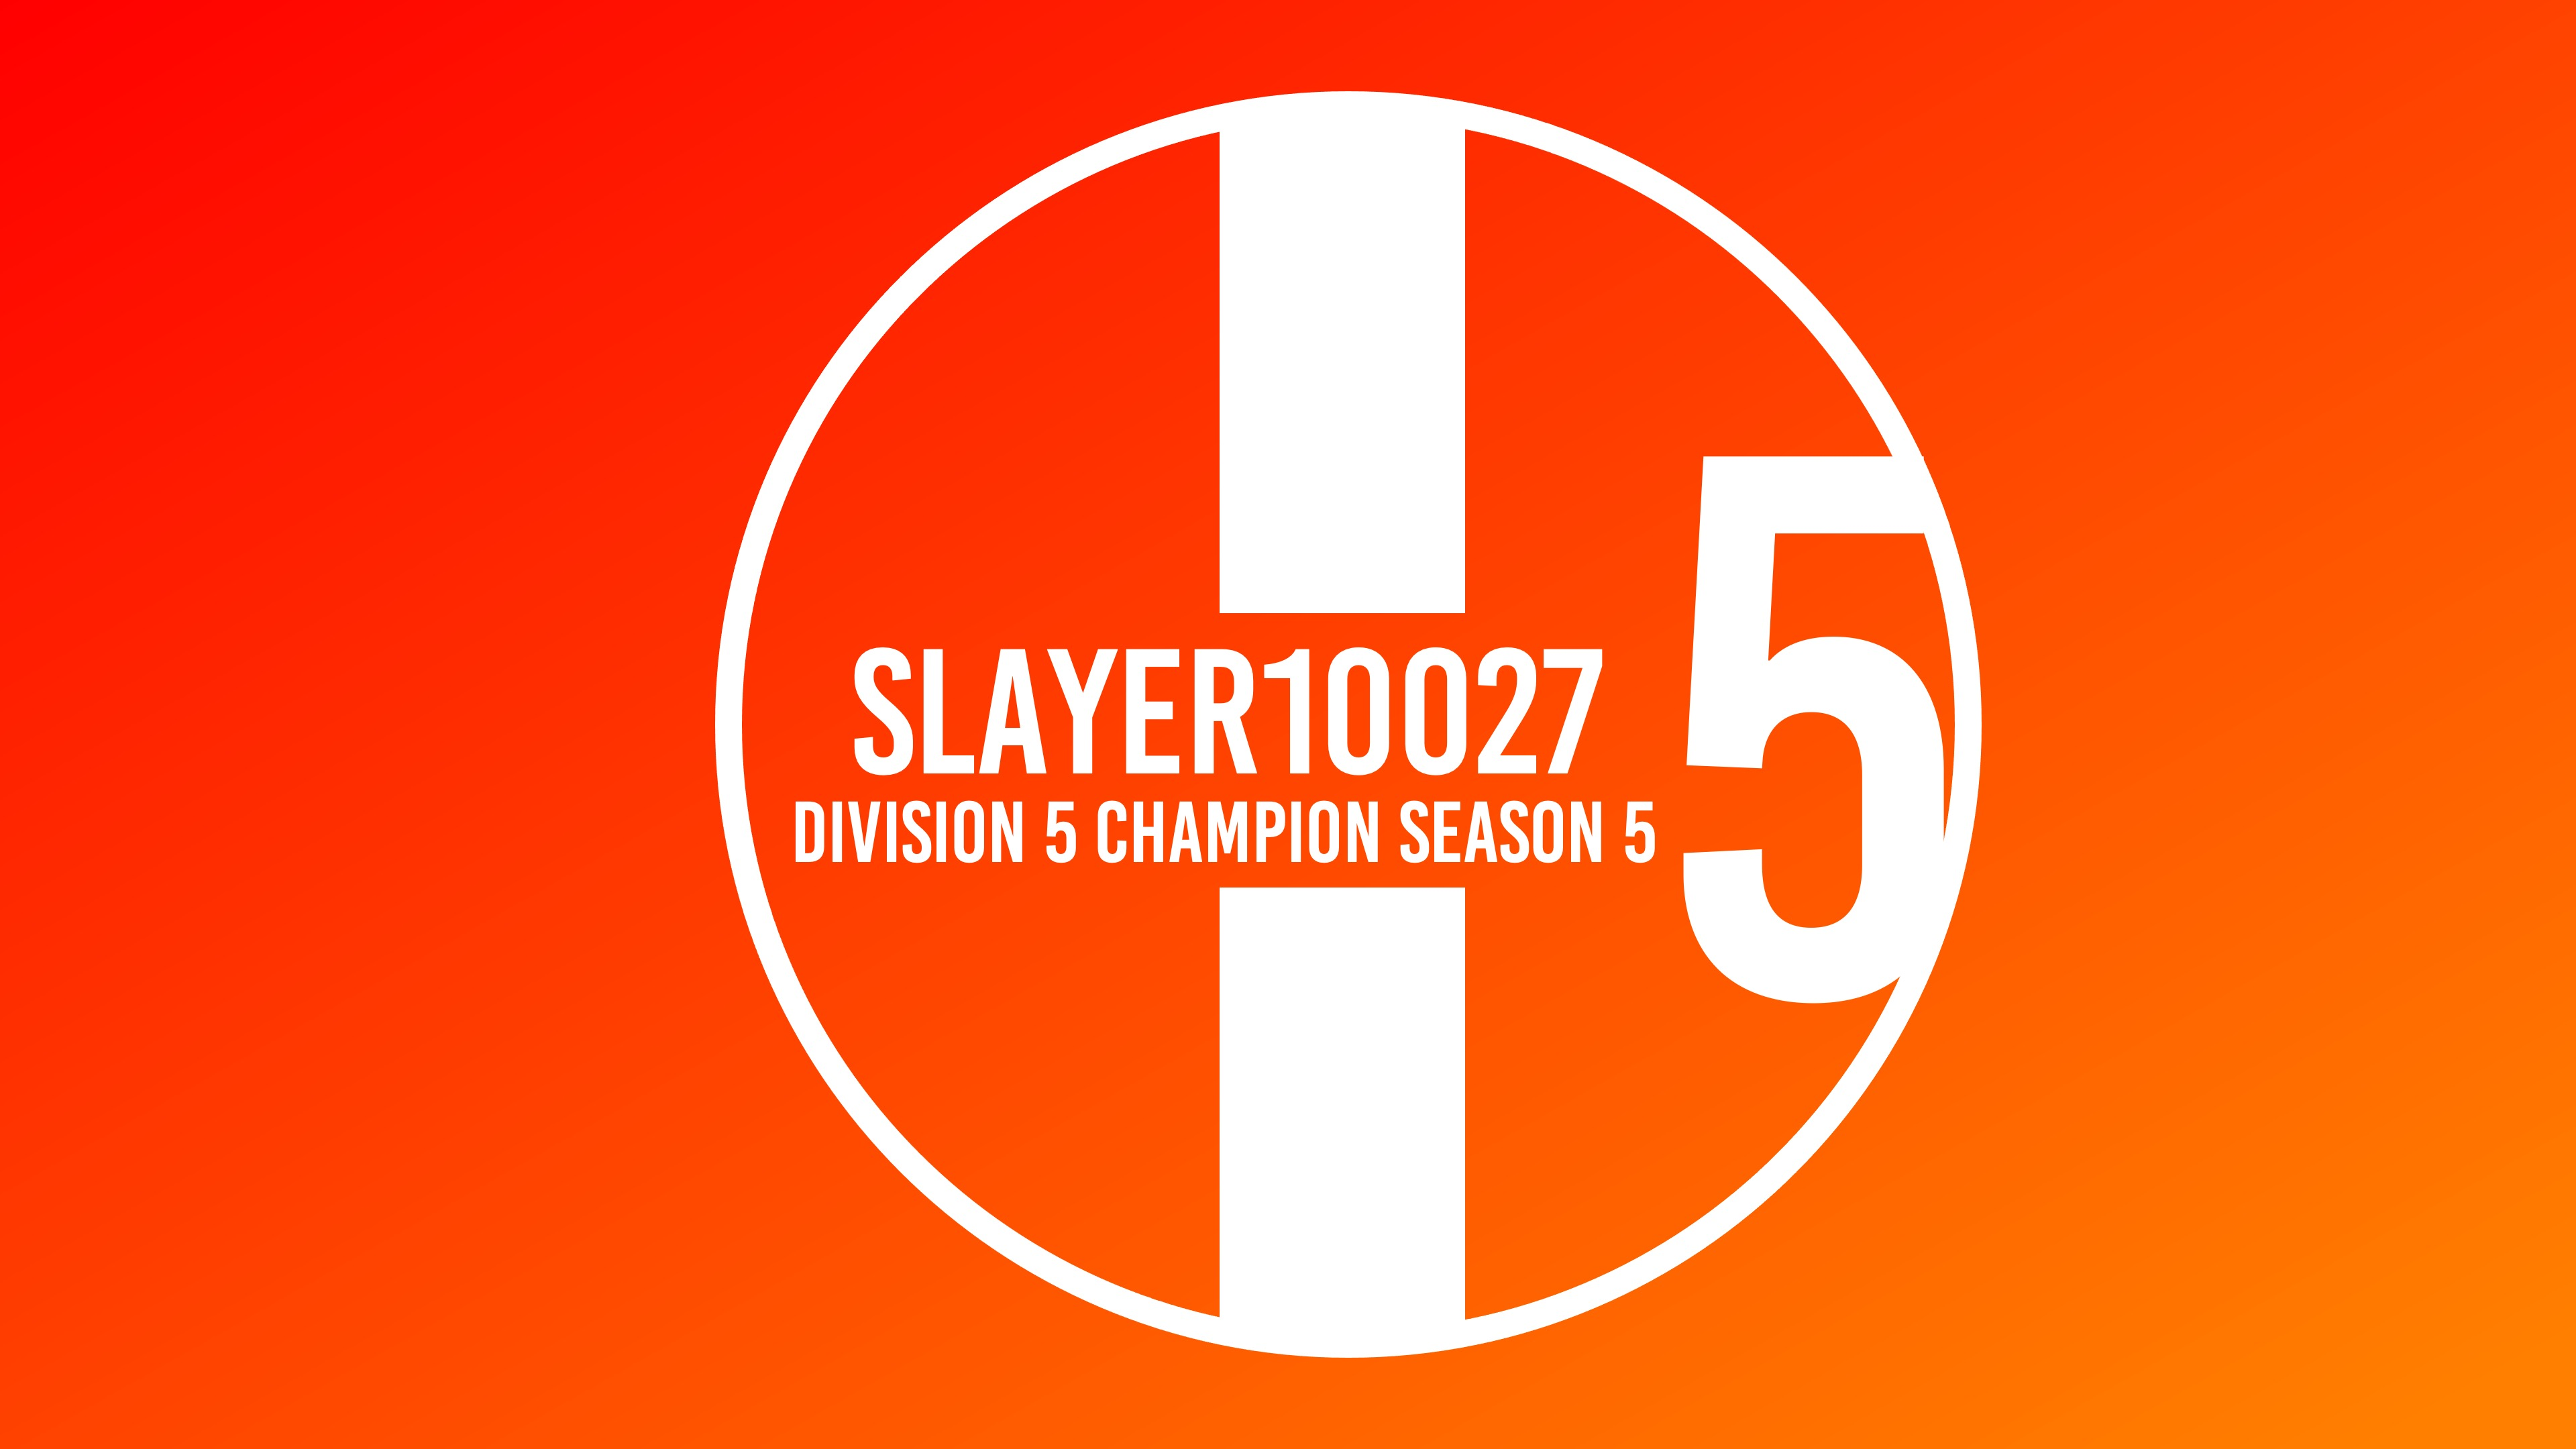 Division 5 Champion - slayer10027